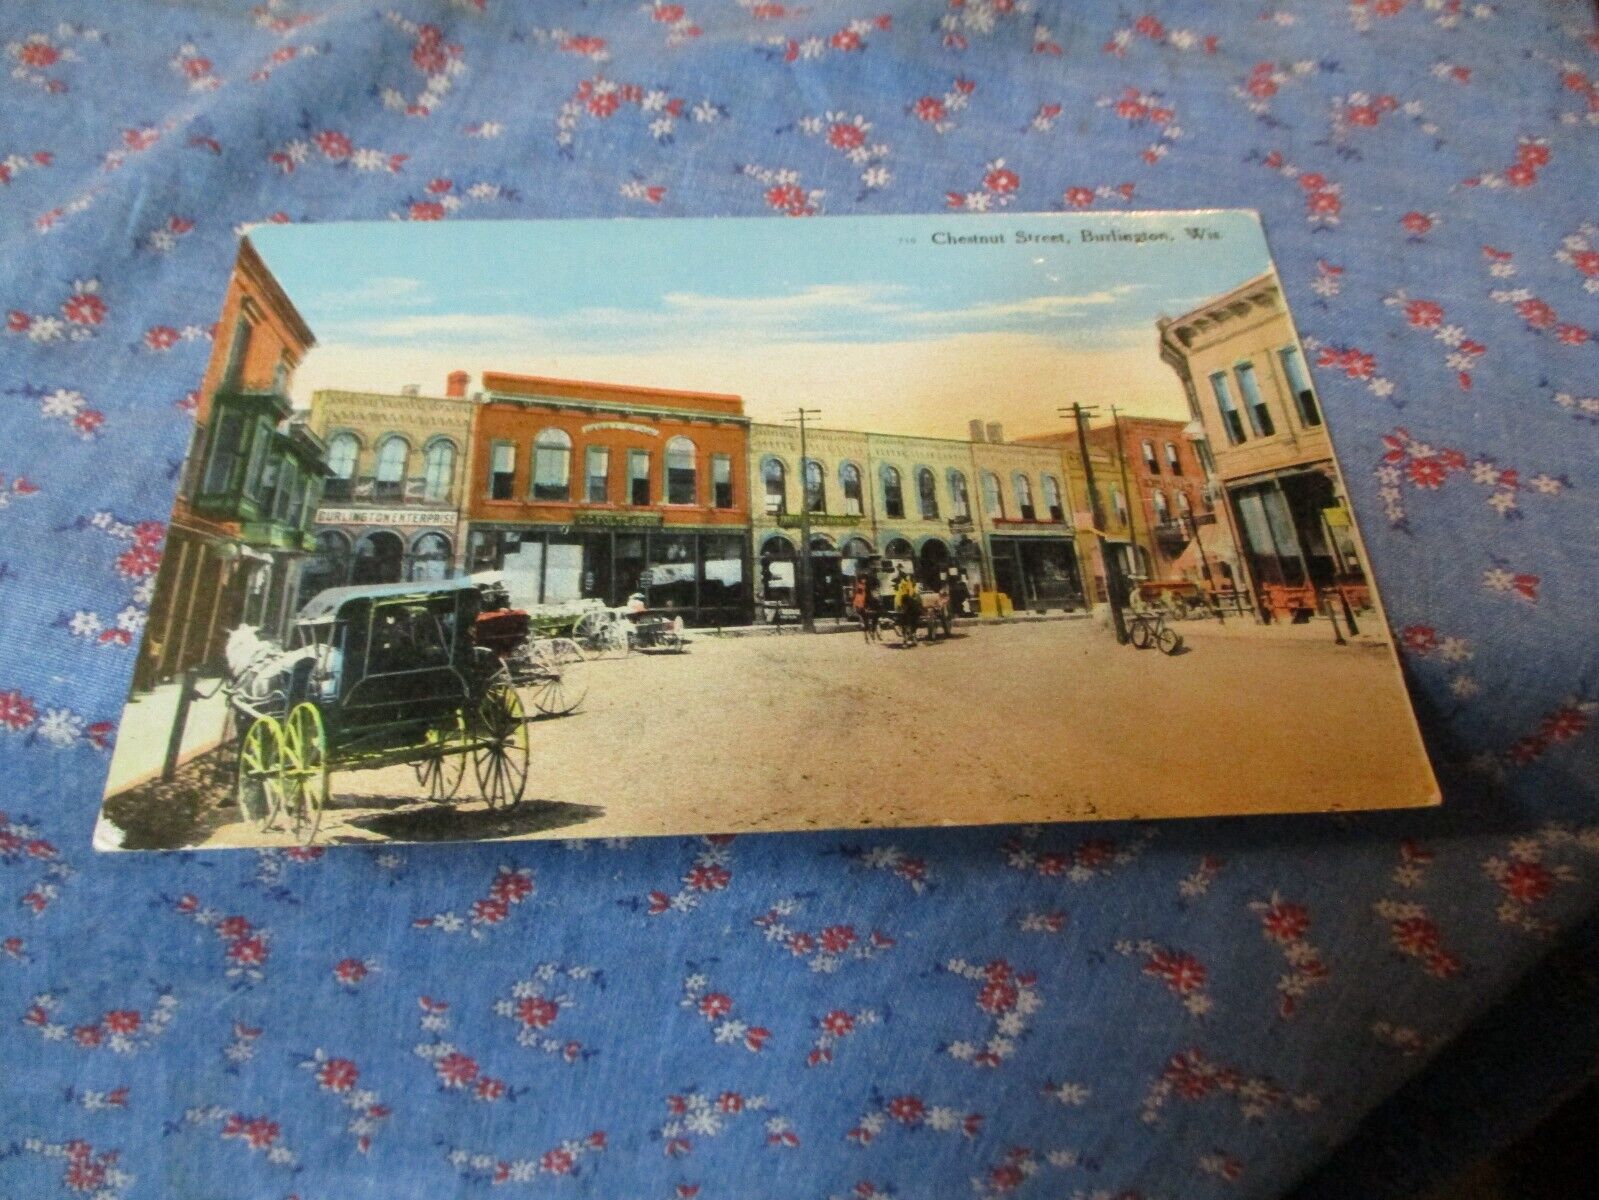 (1032) Old Postcard Chestnut Street Burlington Wis    Great Detail